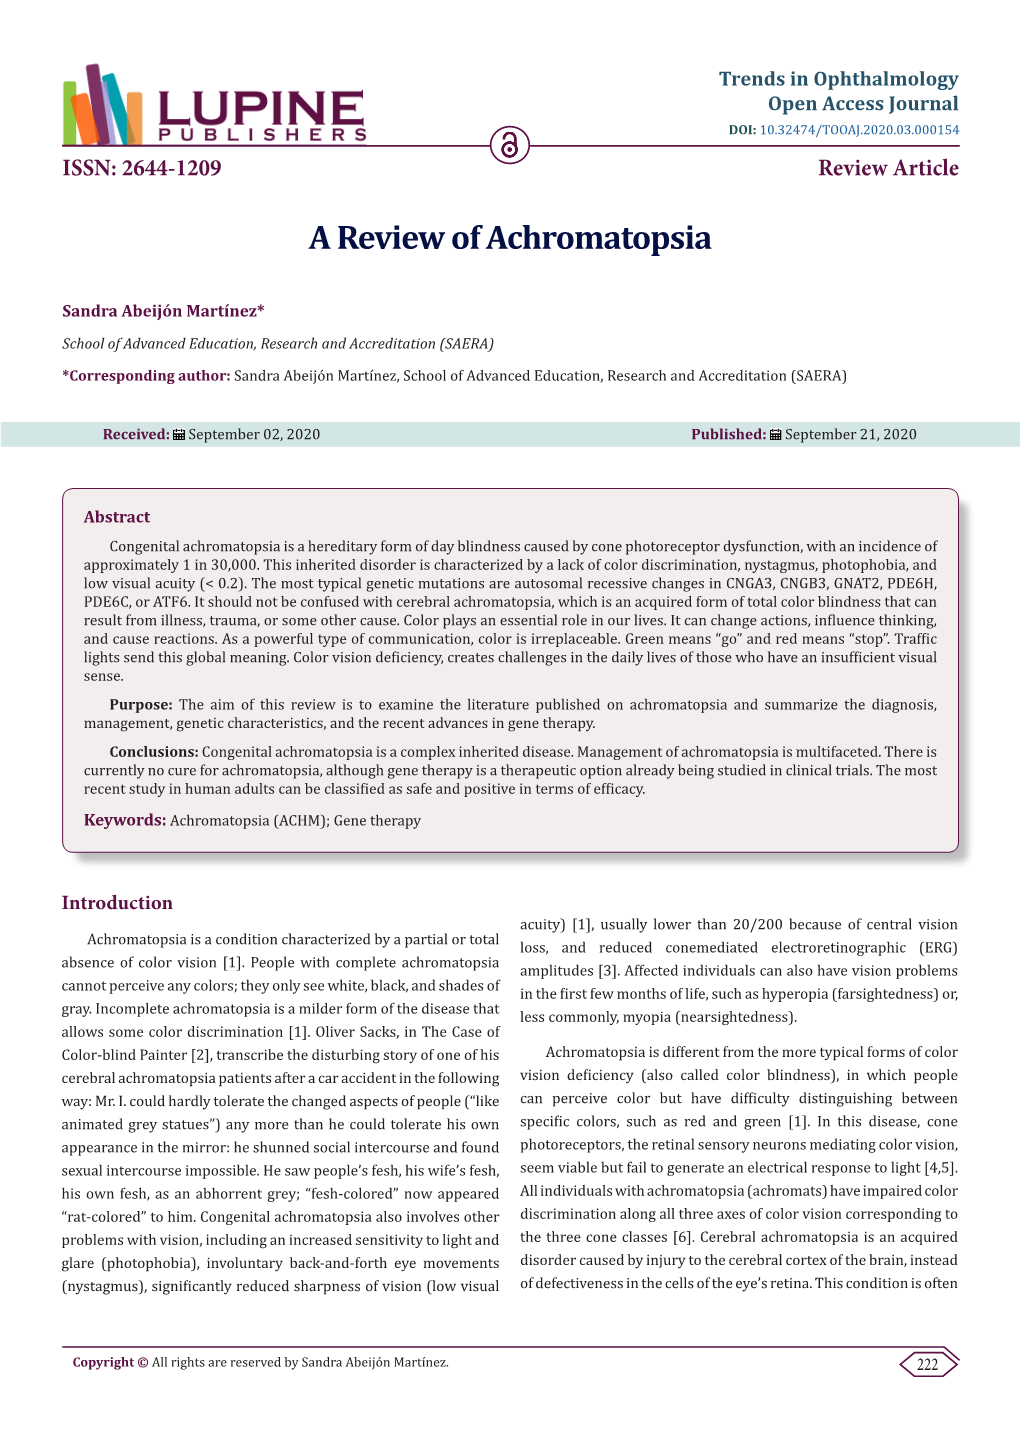 A Review of Achromatopsia